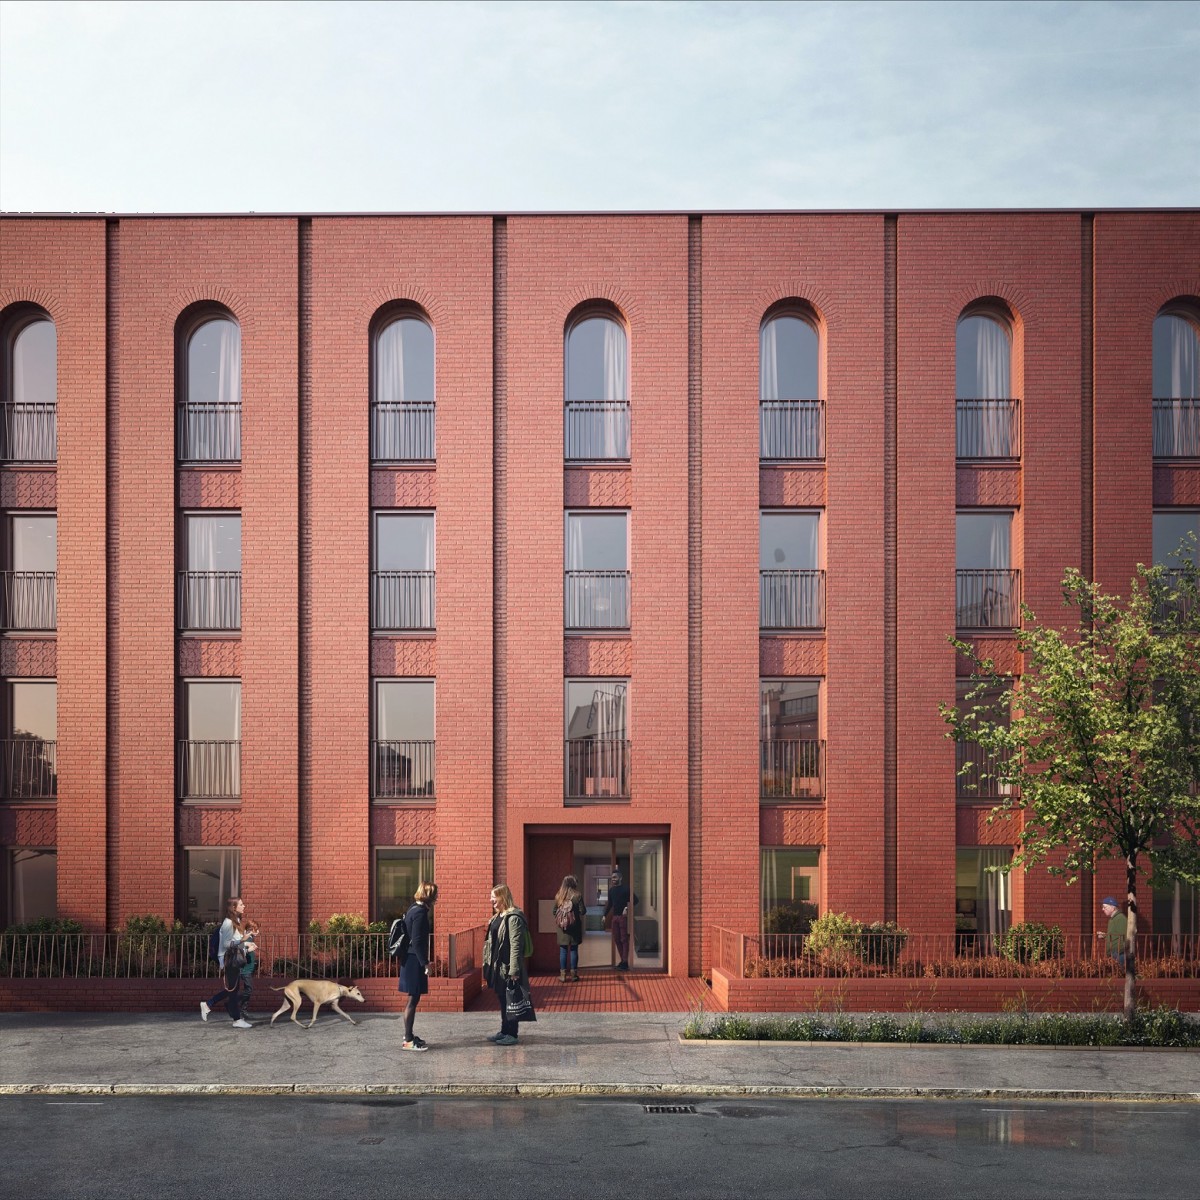 Merchant Homes unveils ‘bowl’ design for Ibrox flats proposal